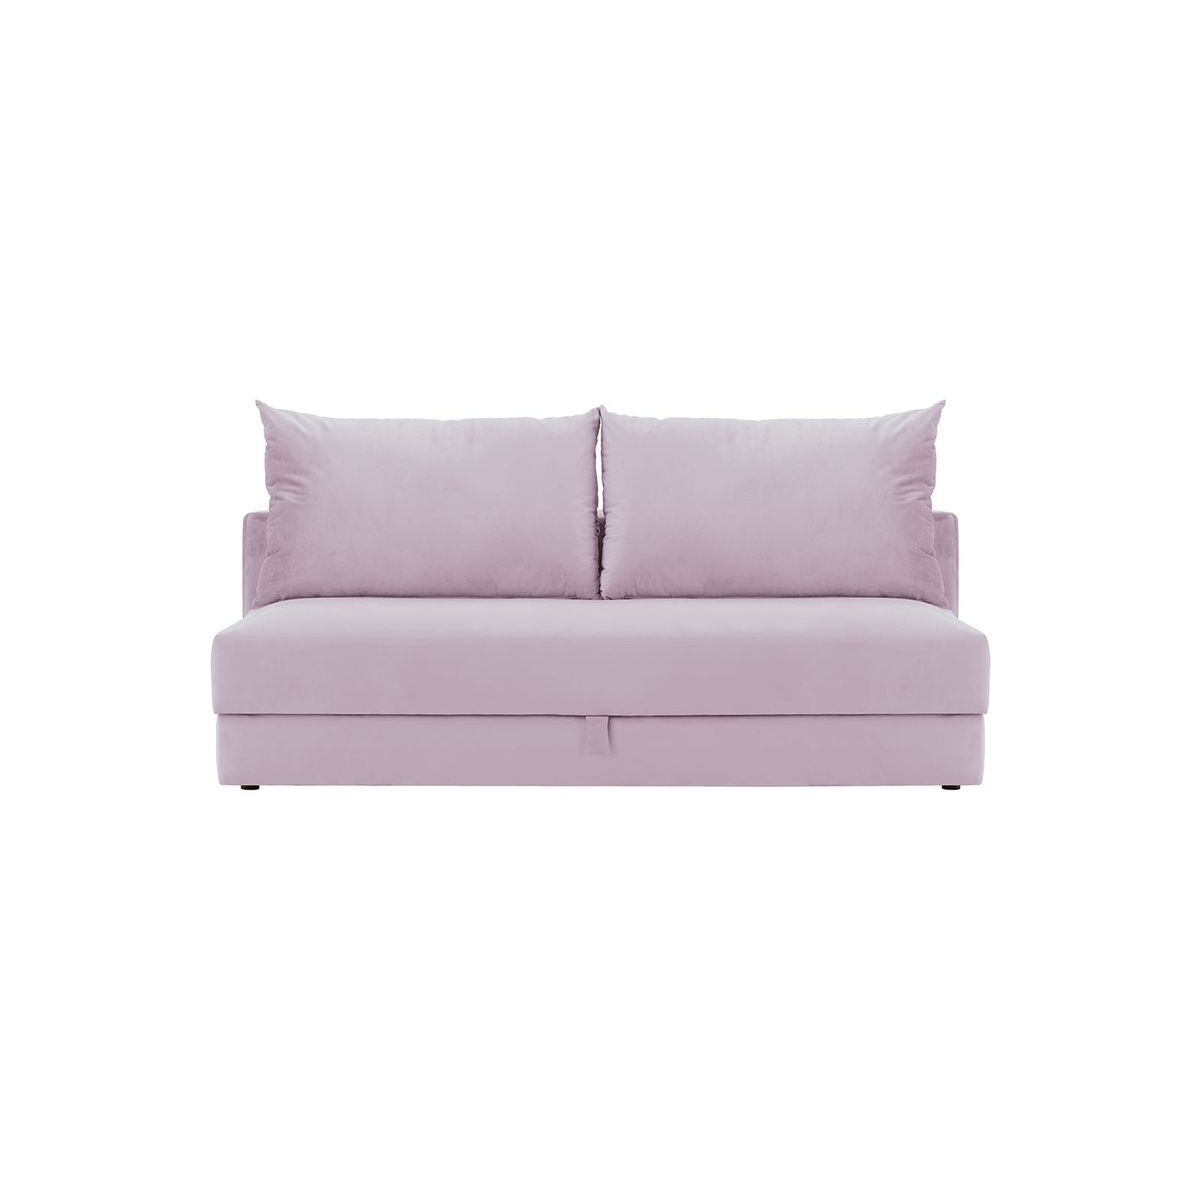 Vena 3 seater Sofa Bed, lilac - image 1